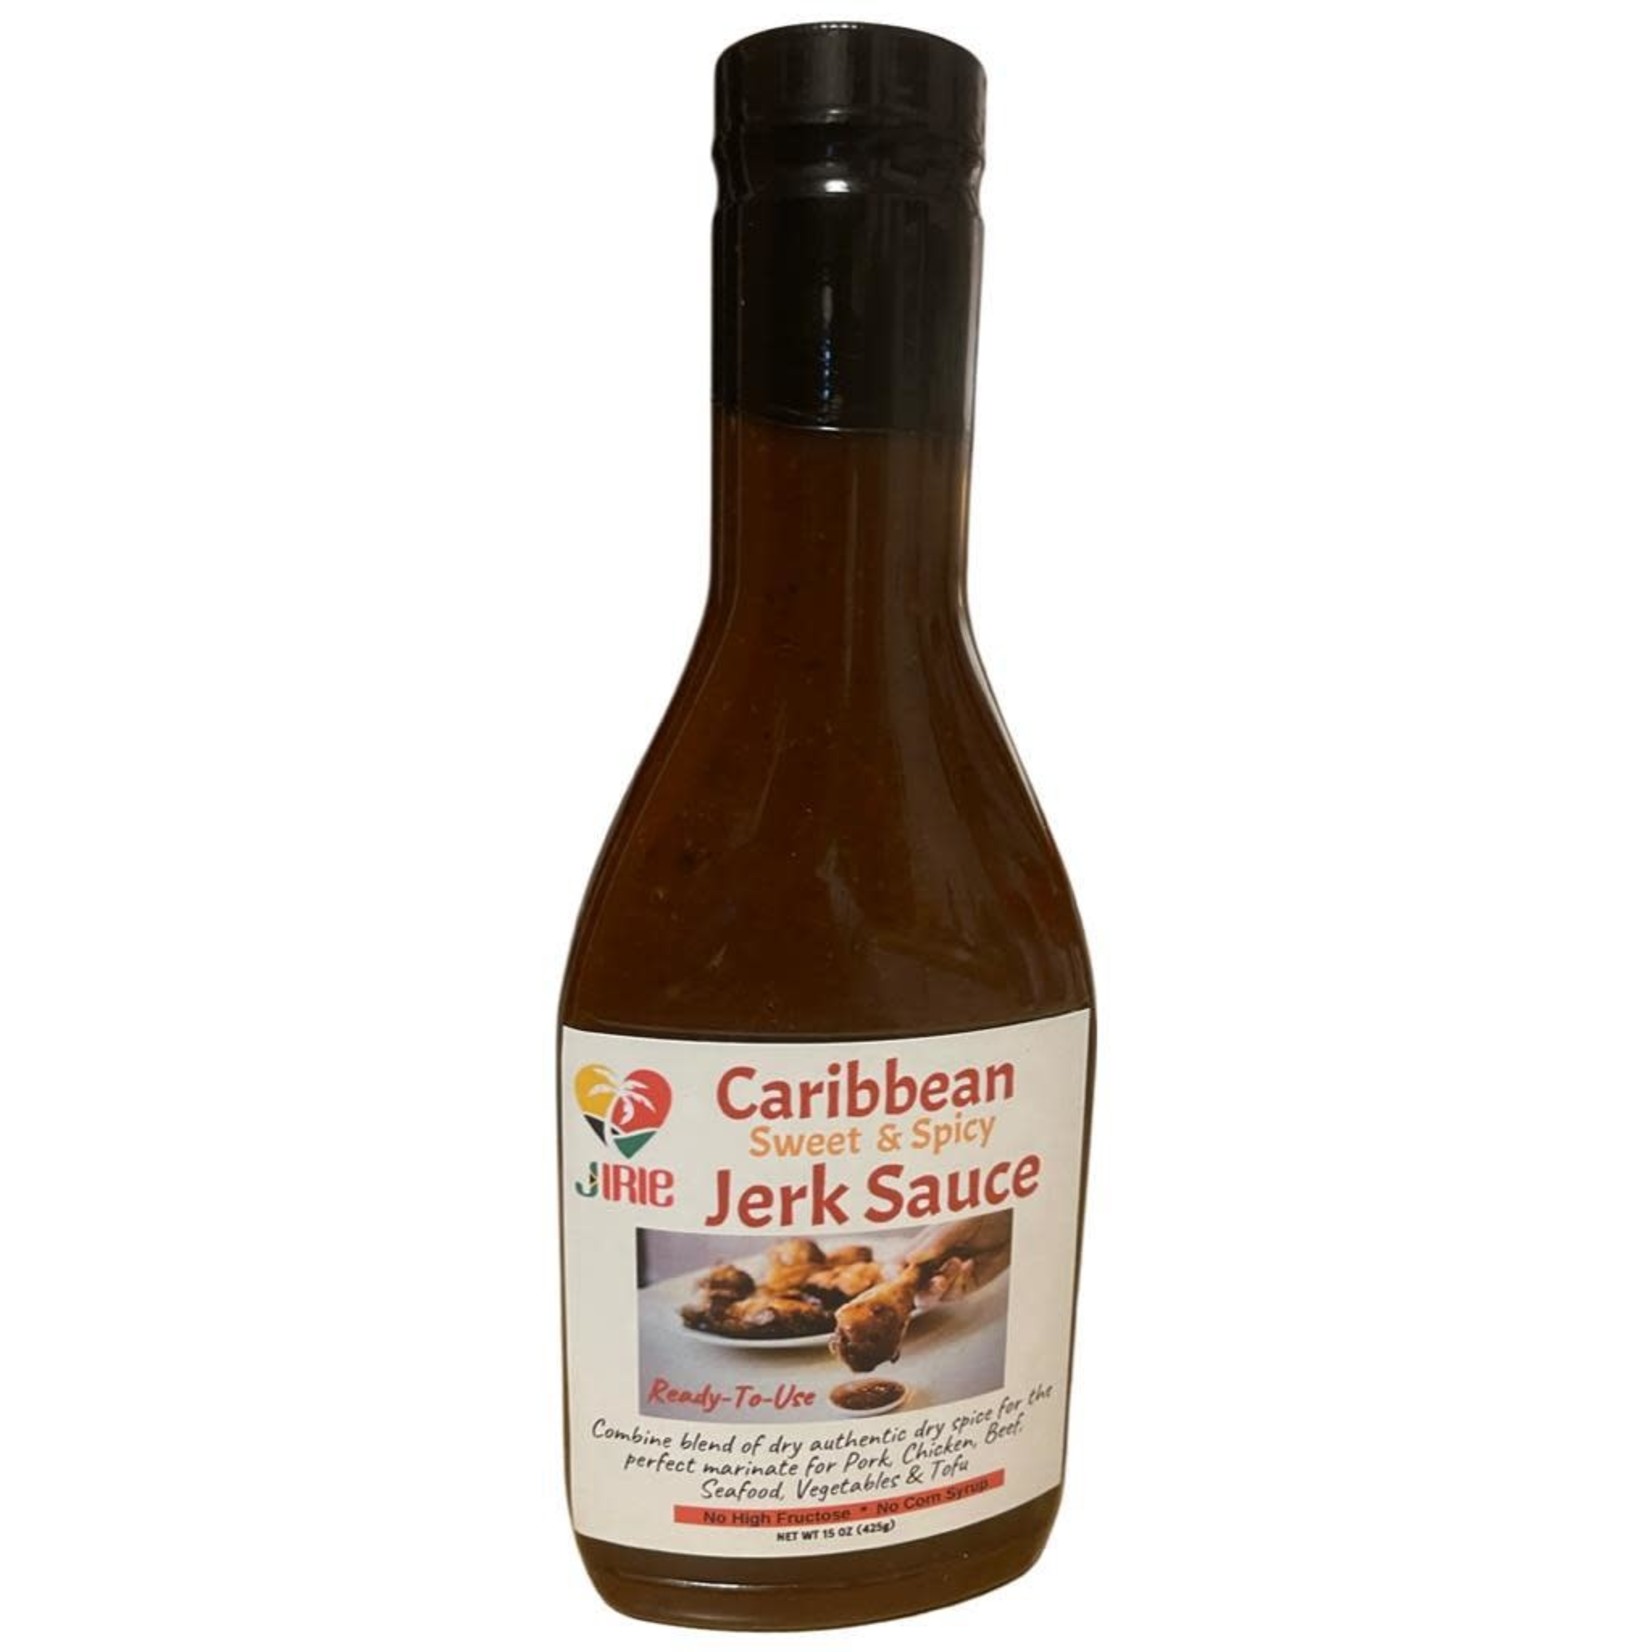 Jerk Seasoning – Spicy Caribbee